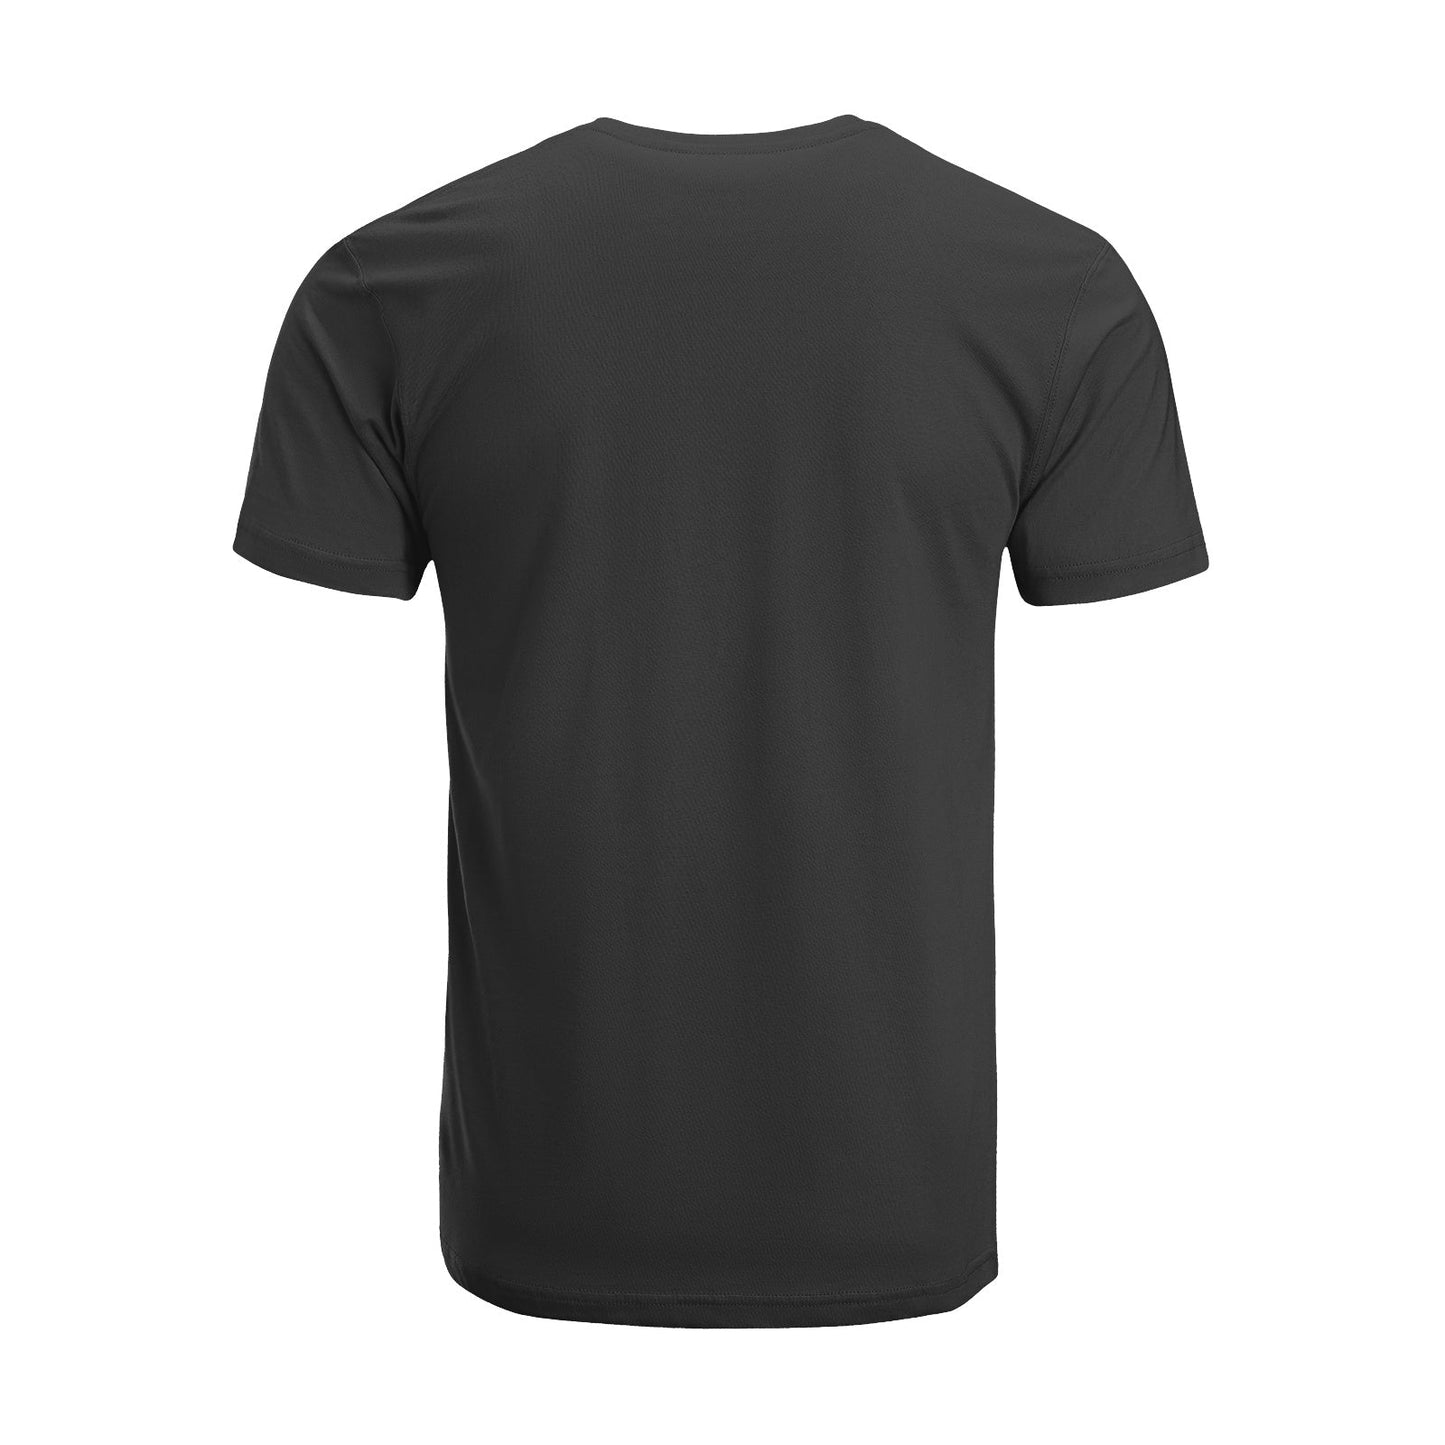 Unisex Short Sleeve Crew Neck Cotton Jersey T-Shirt CAT 25 - Tara-Outfits.com